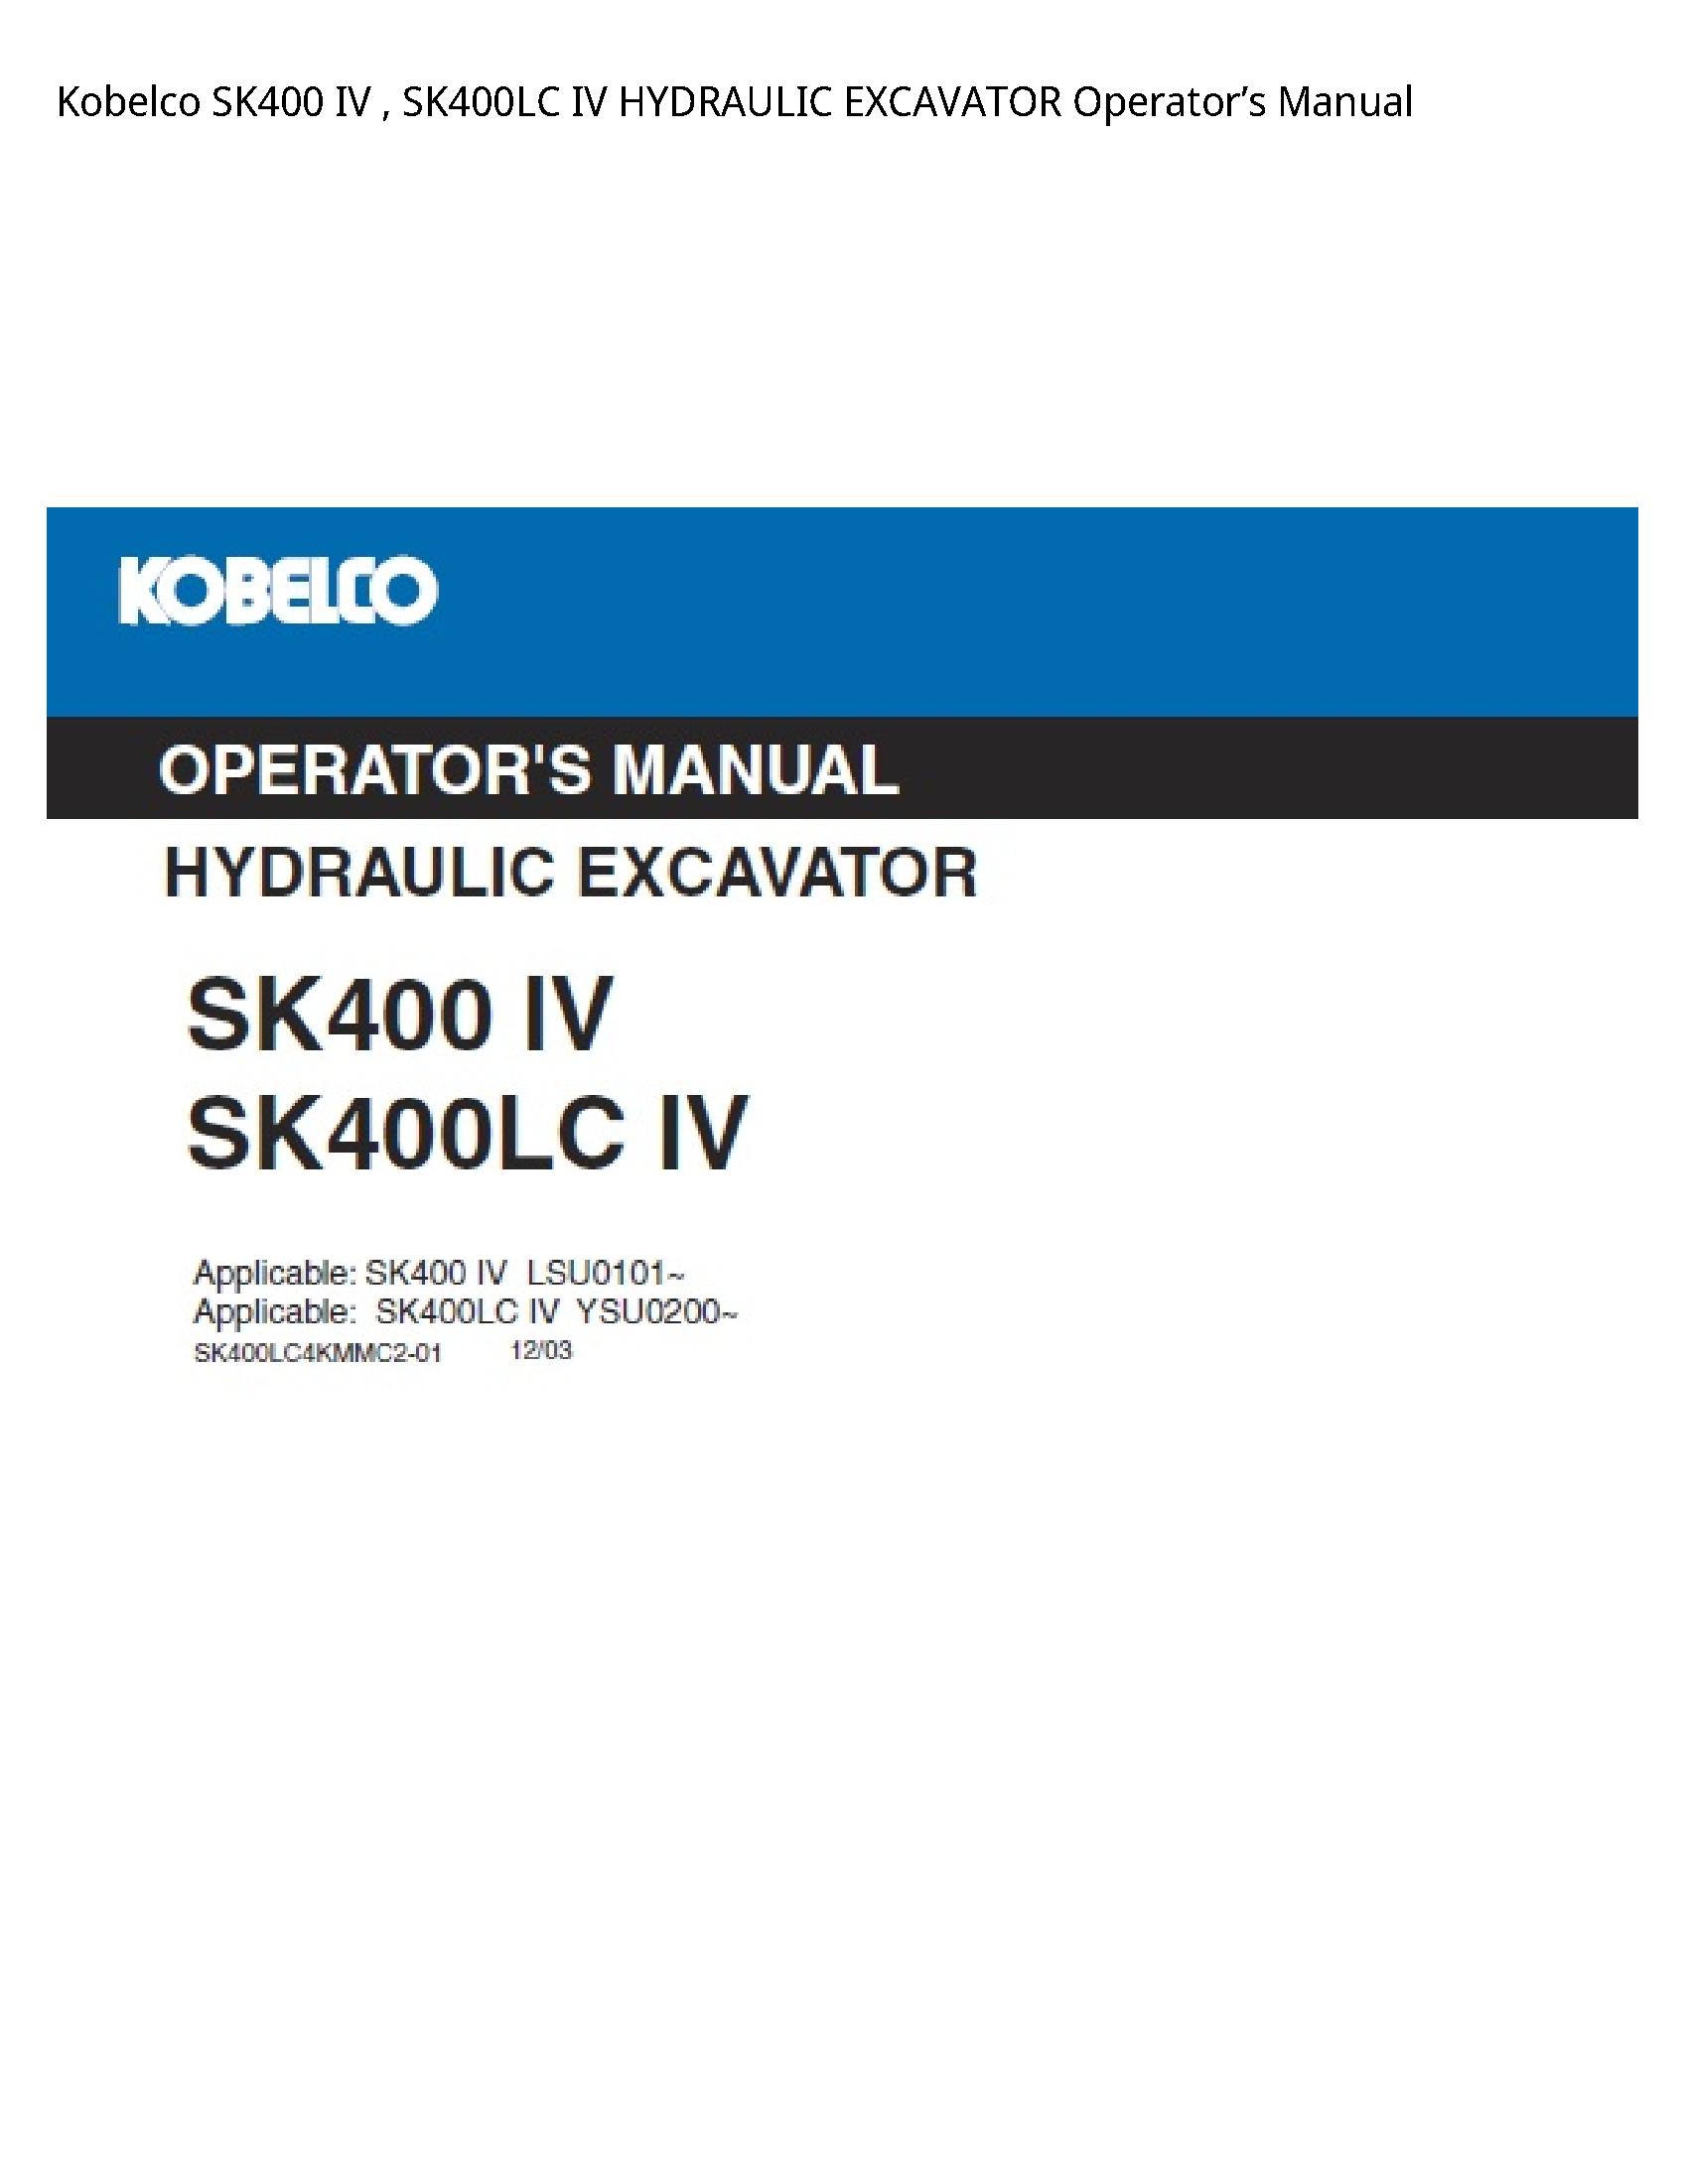 Kobelco SK400 IV IV HYDRAULIC EXCAVATOR Operator’s manual